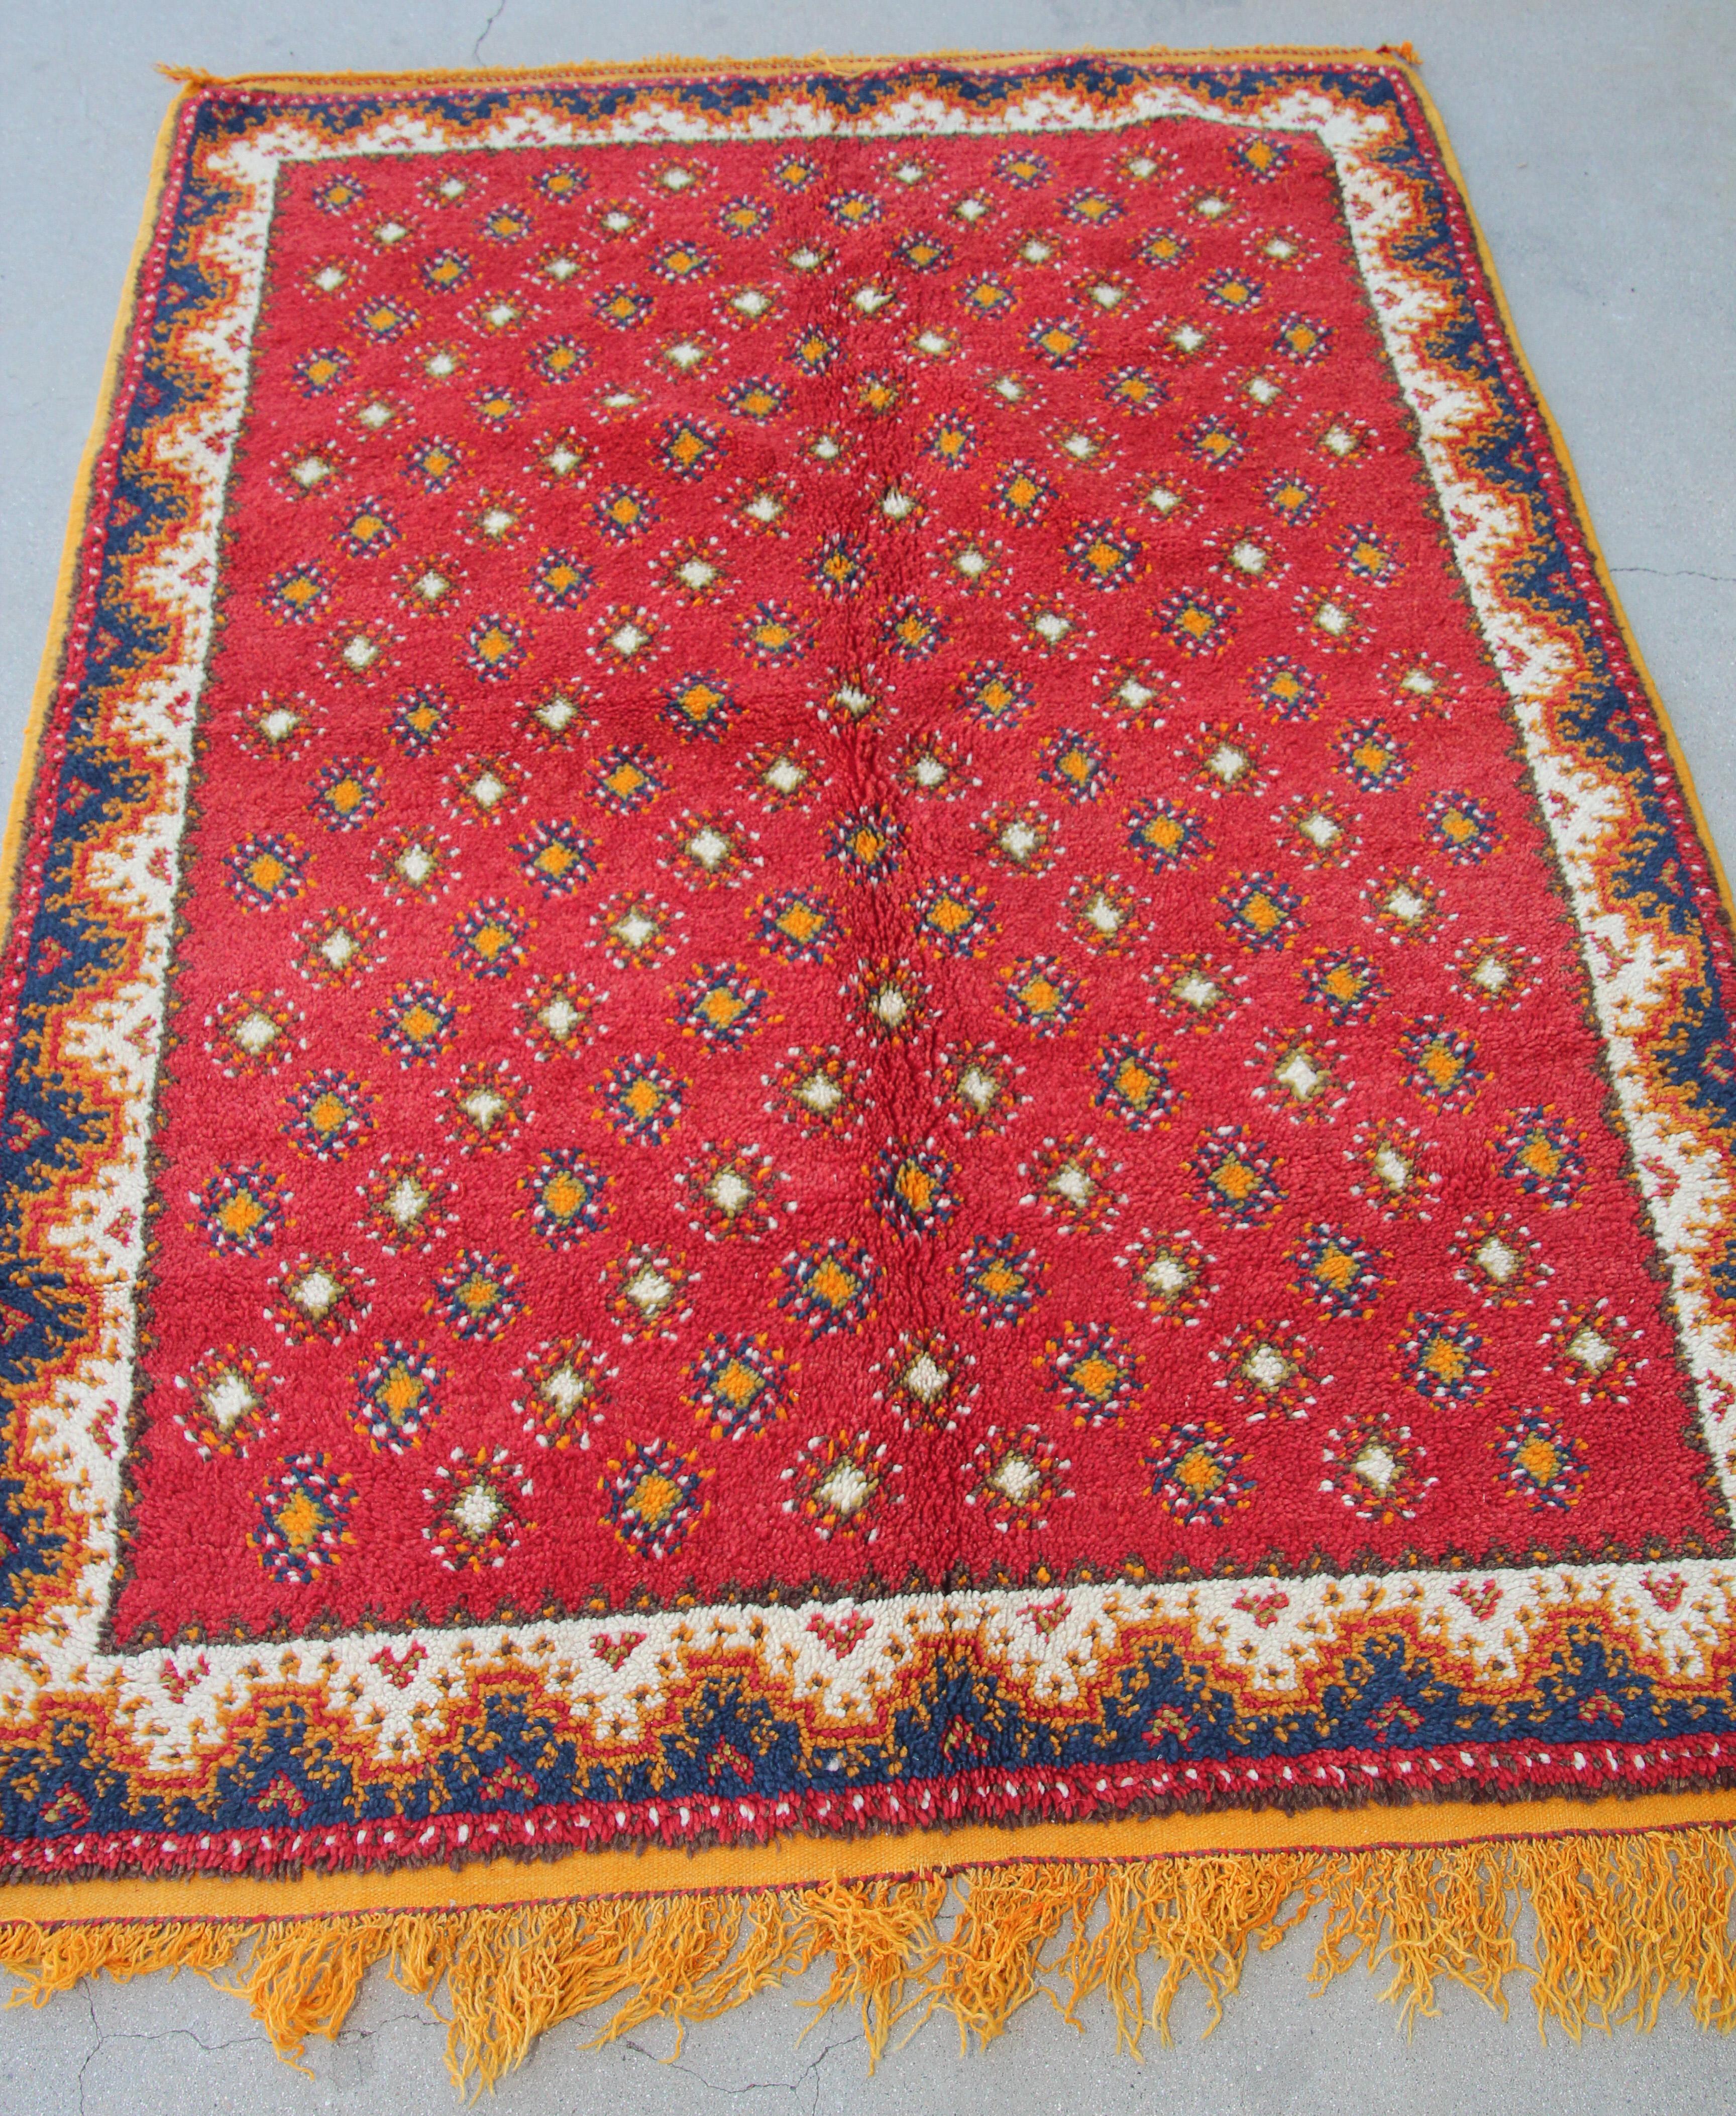 Folk Art 1960s Vintage Moroccan Hand-Woven Berber Carpet For Sale